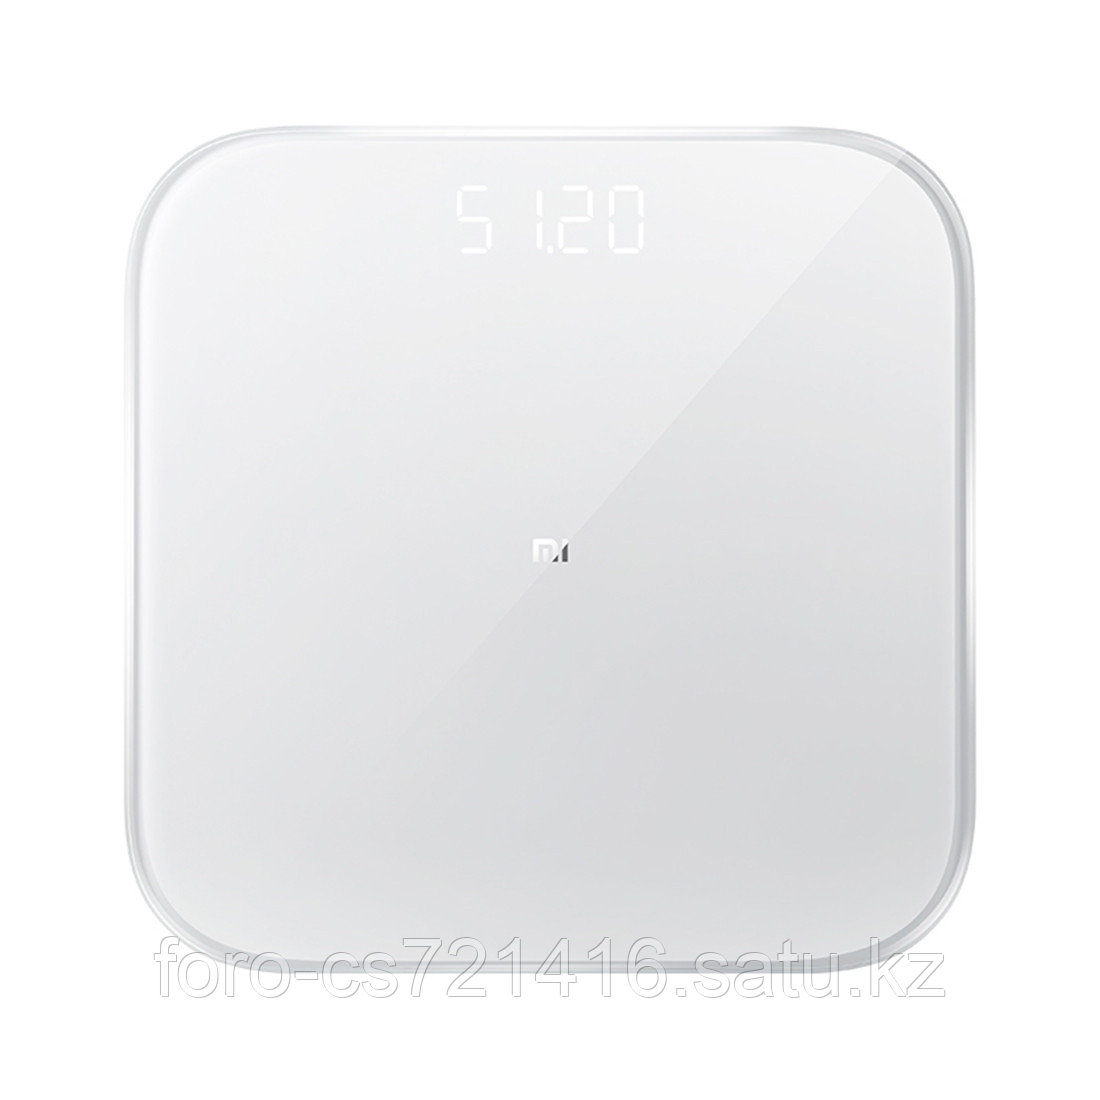 Весы Xiaomi Mi Smart Scale 2, фото 1